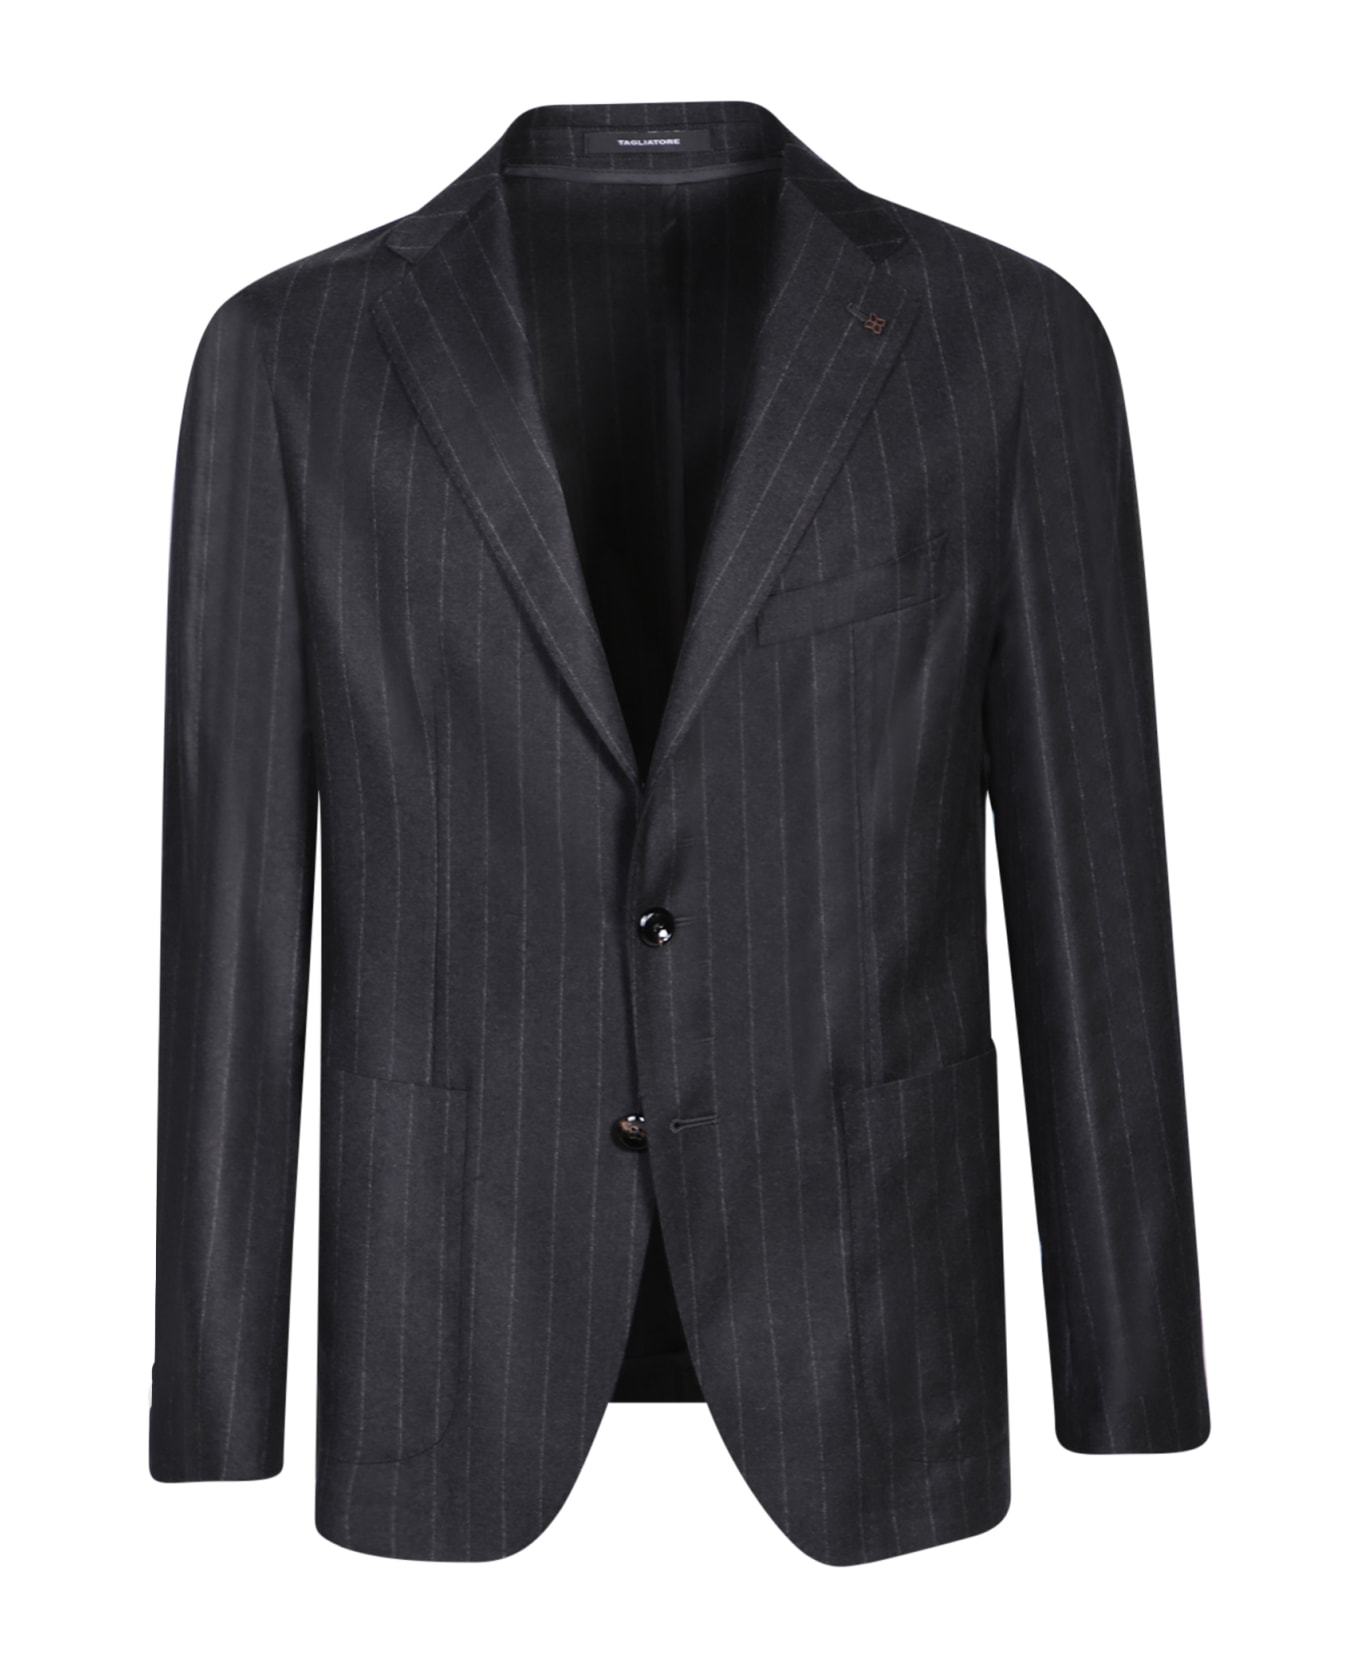 Tagliatore Pinstripe Grey Suit - Grey